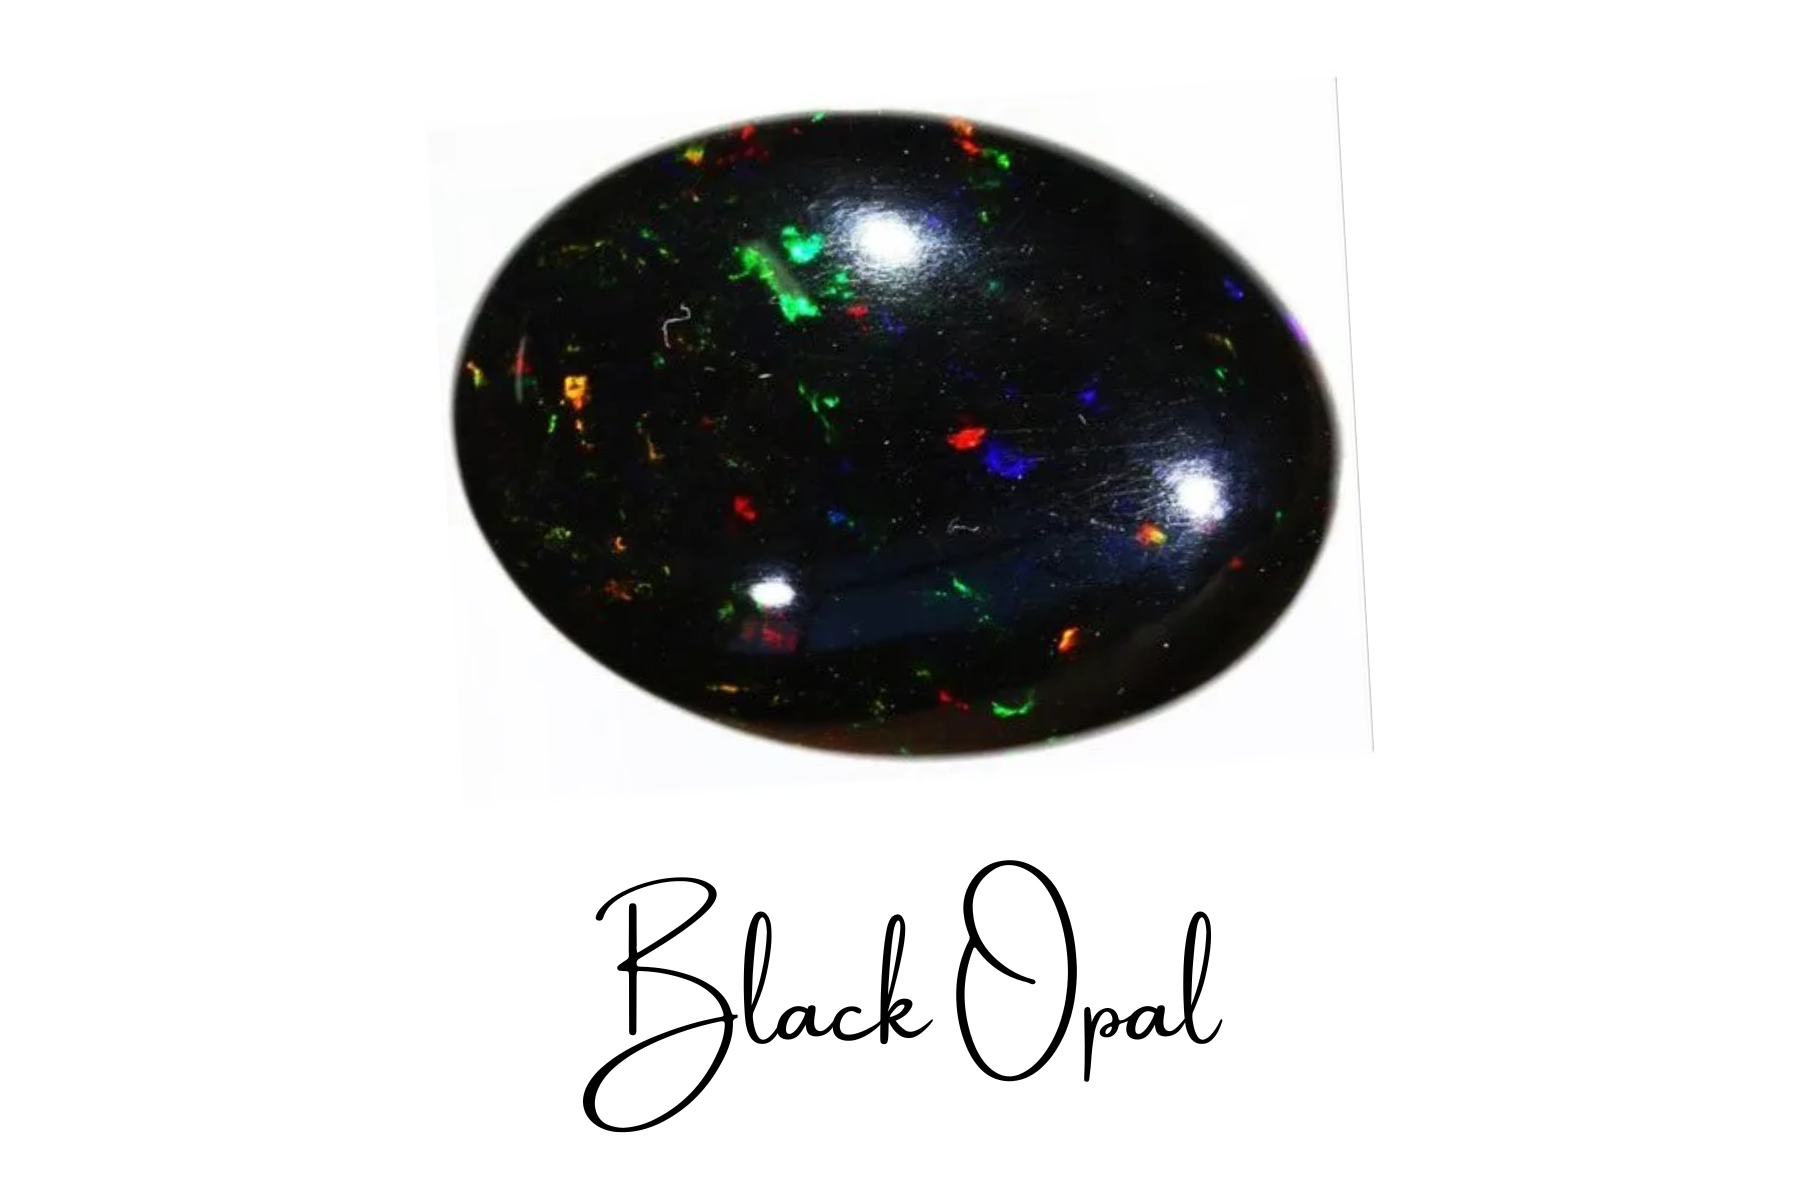 A solid black oblong opal